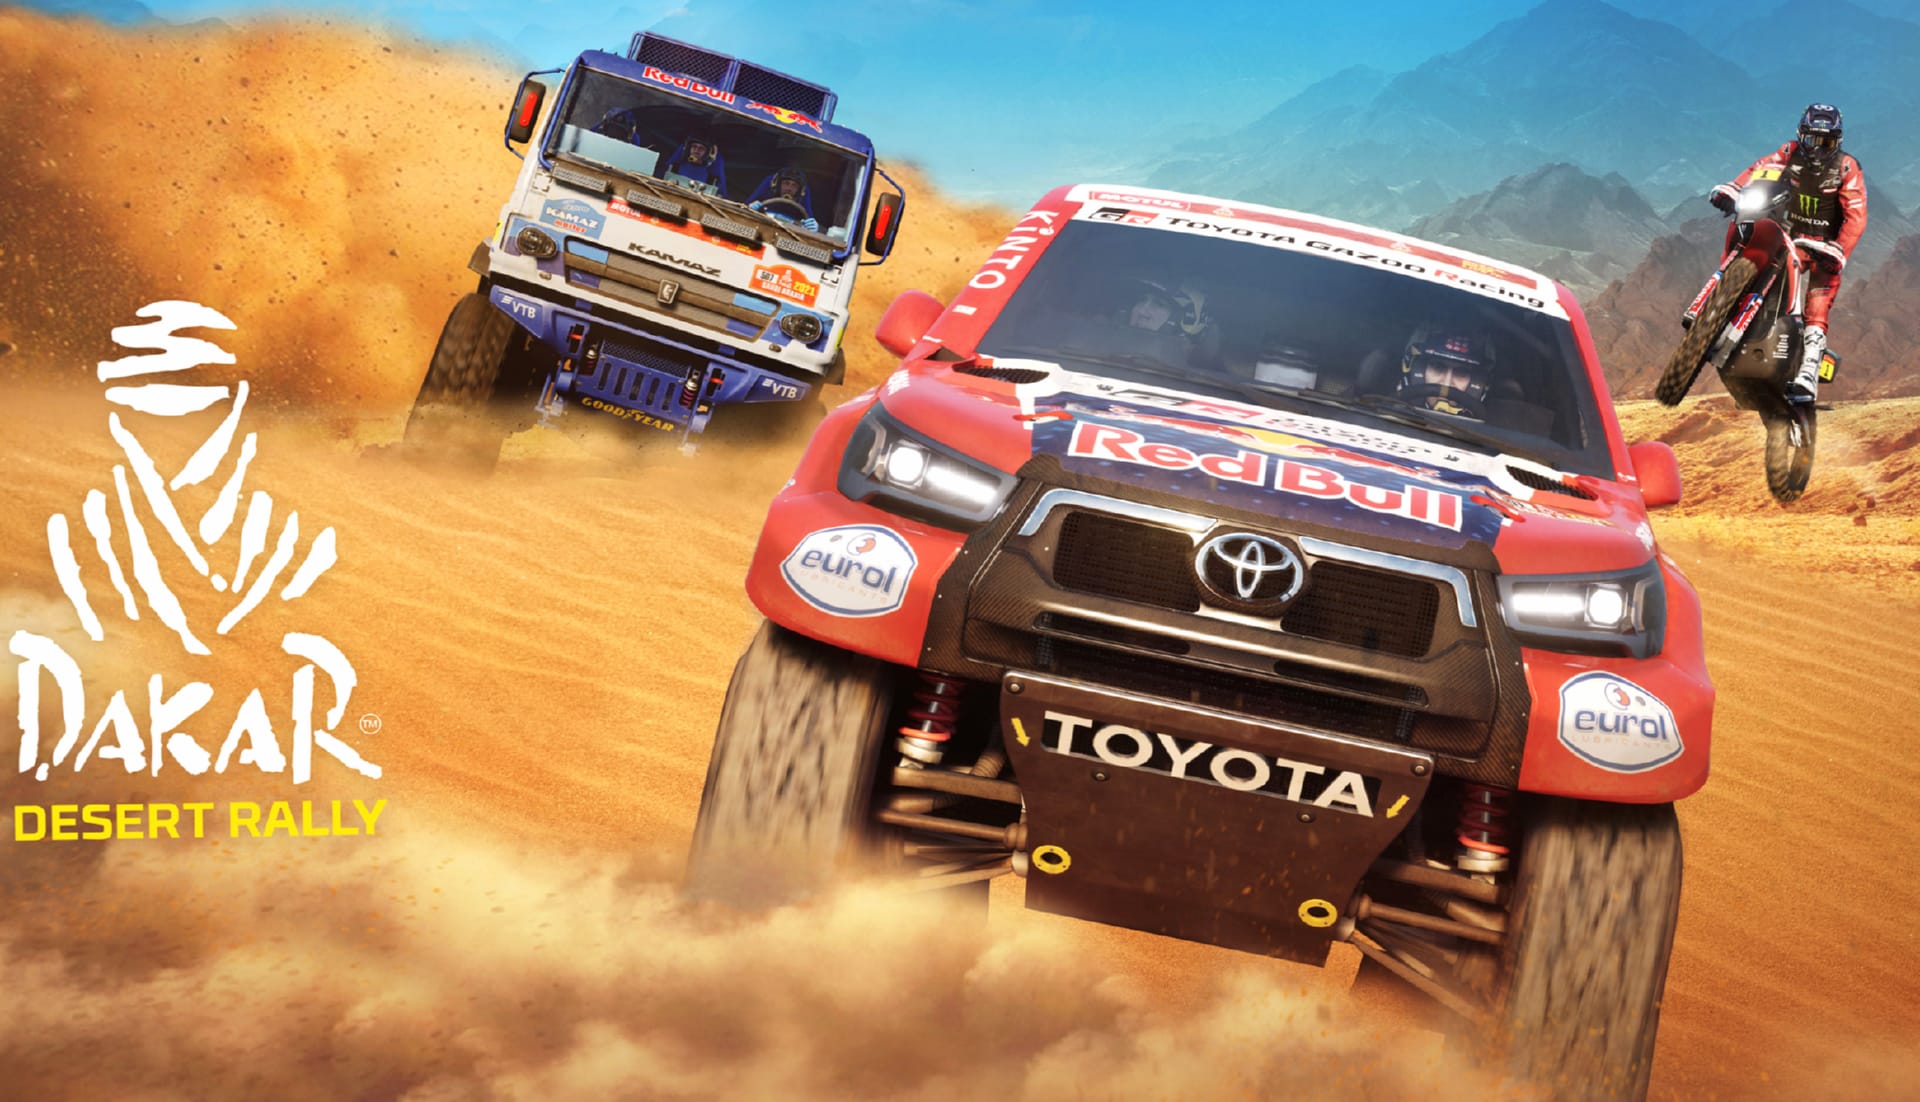 Dakar Desert Rally at 320 x 480 iPhone size wallpapers HD quality